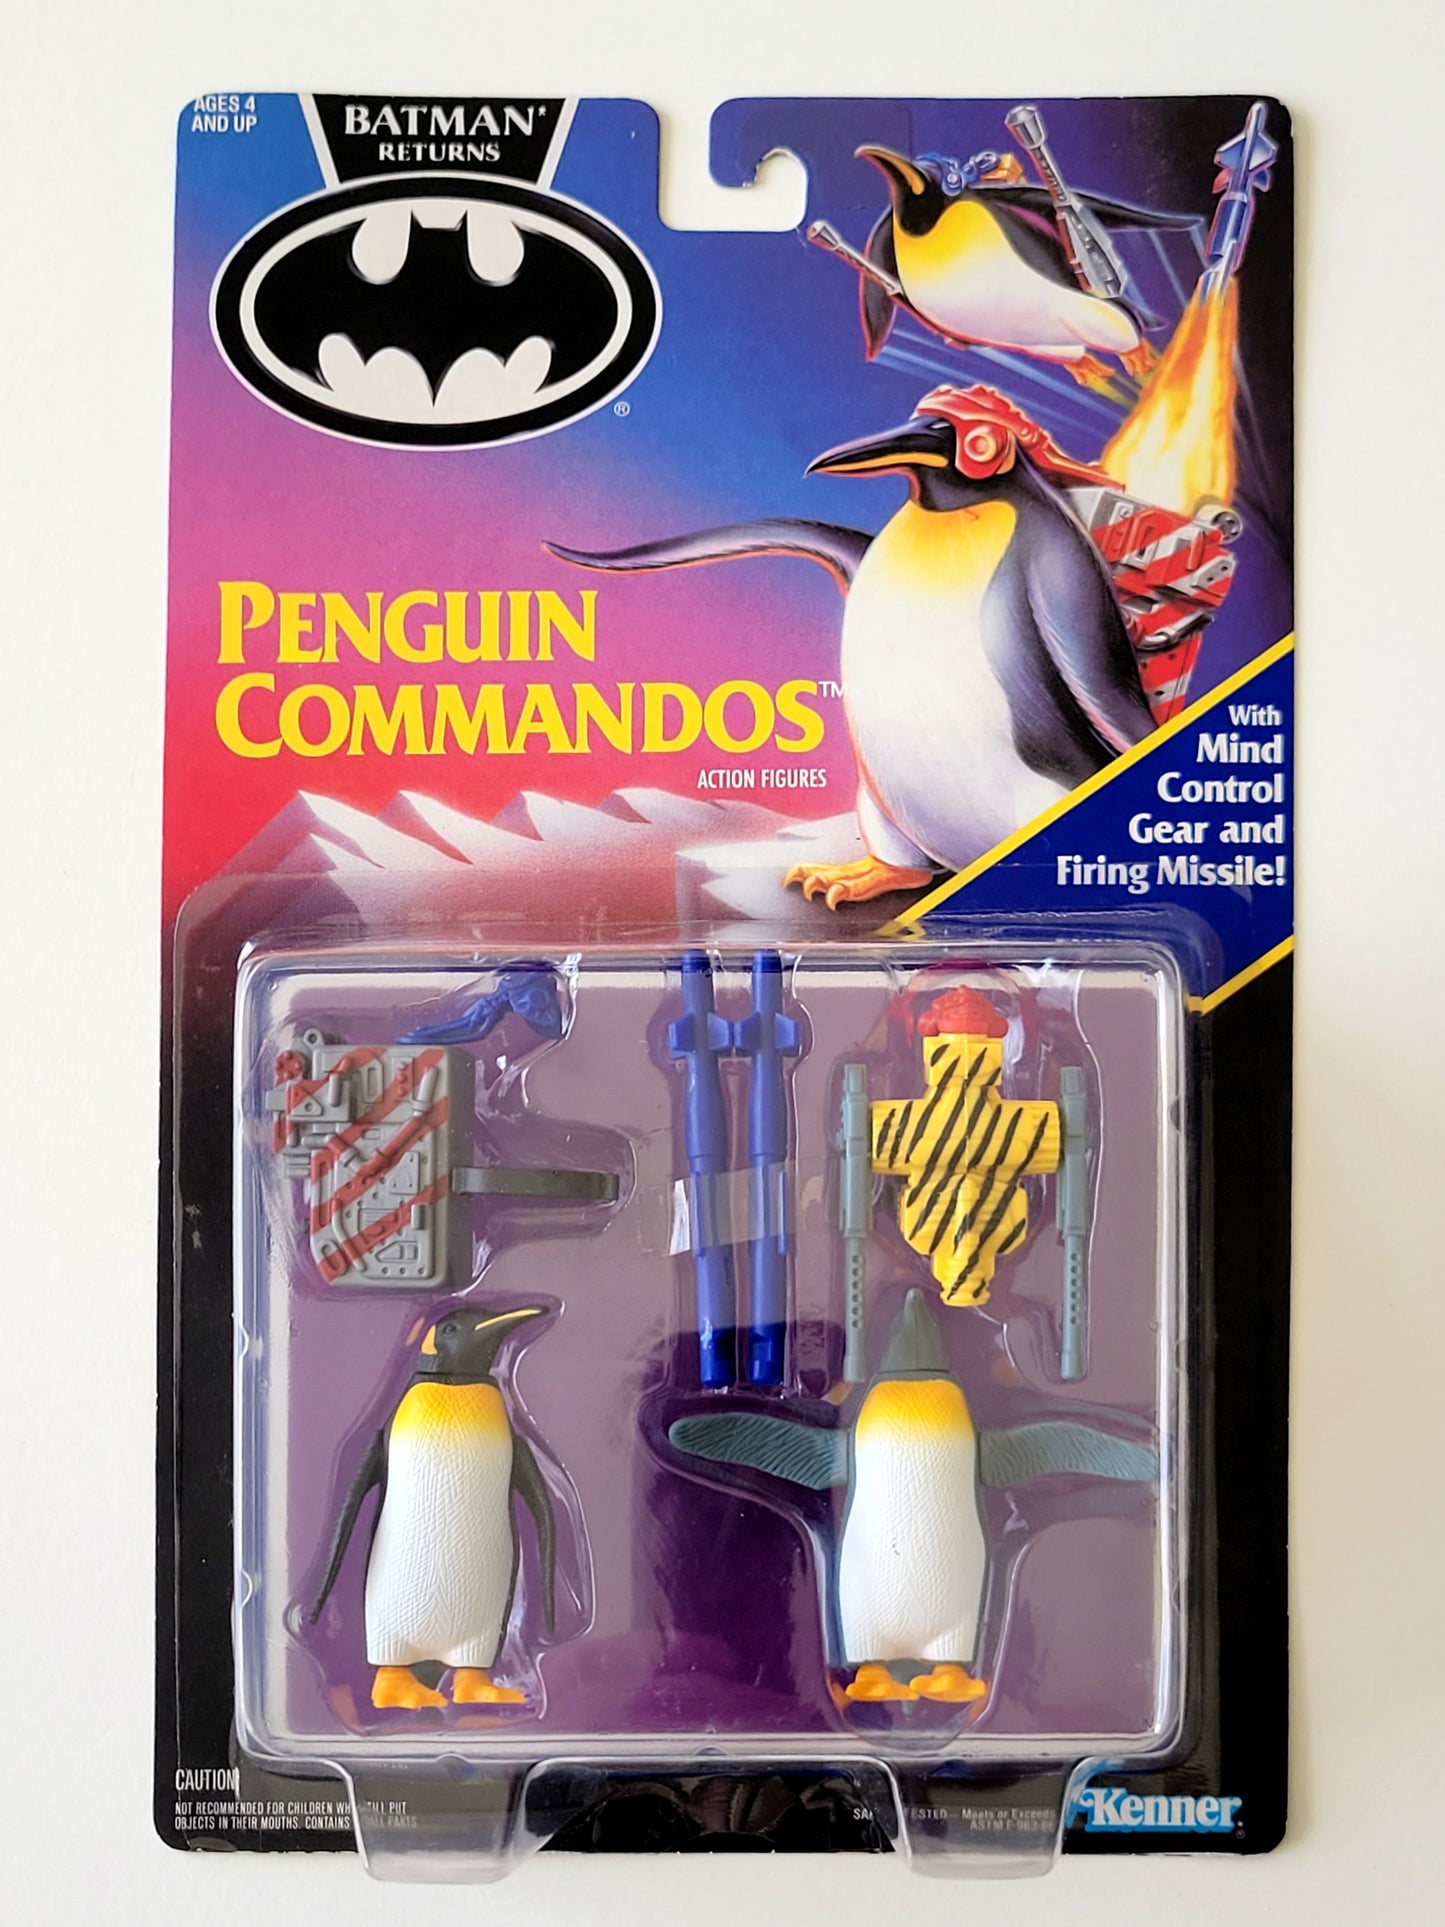 Penguin Commandos Action Figures from Batman Returns